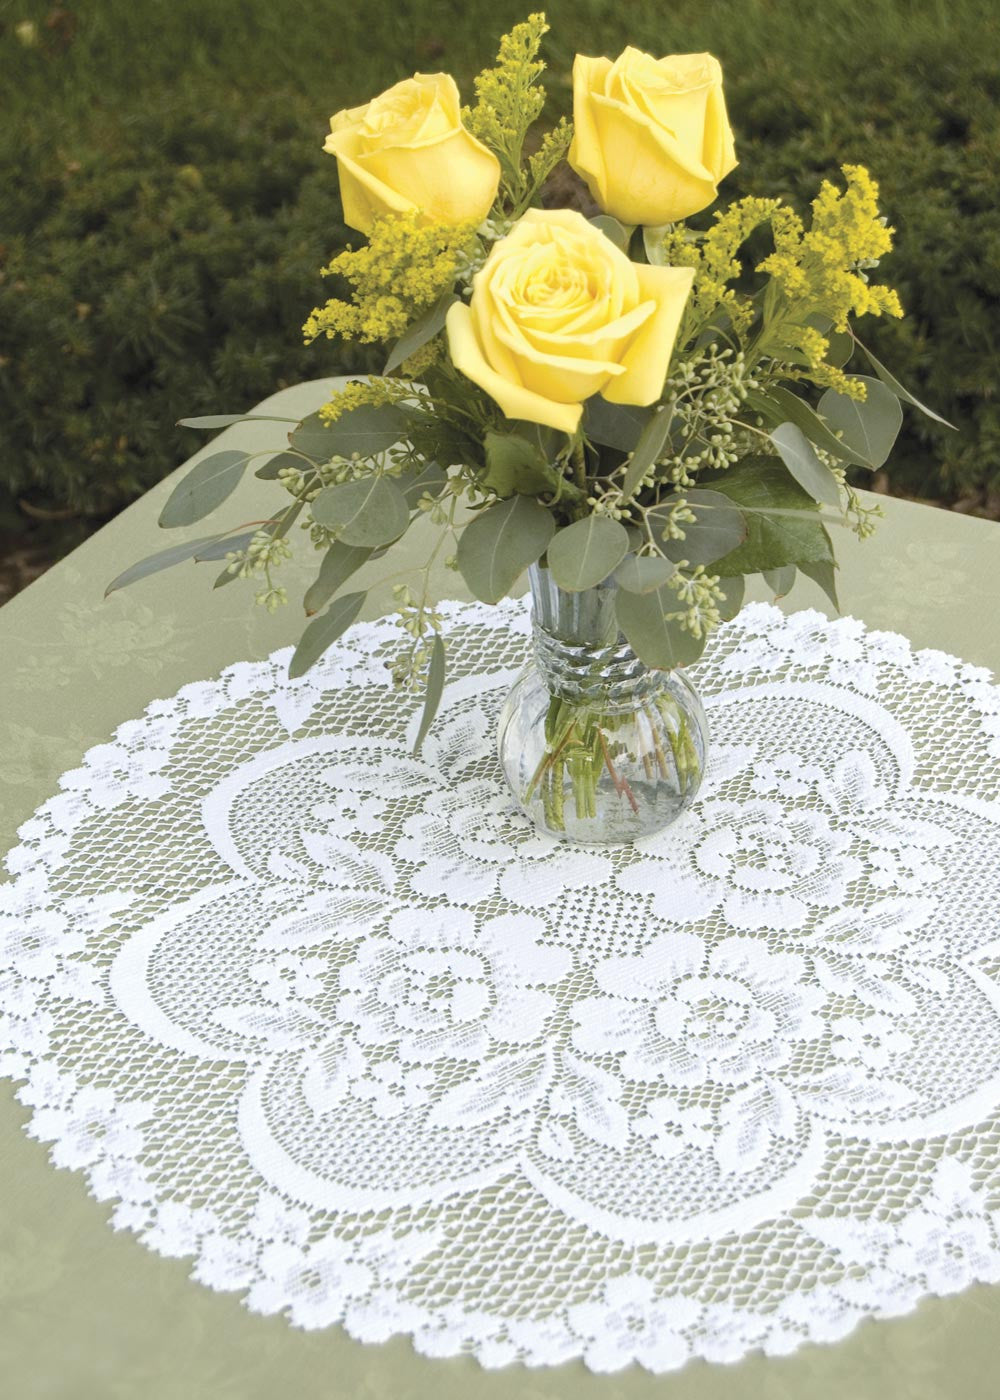  Hsvanyr Round Crochet Lace Doily Floral Design Fabric